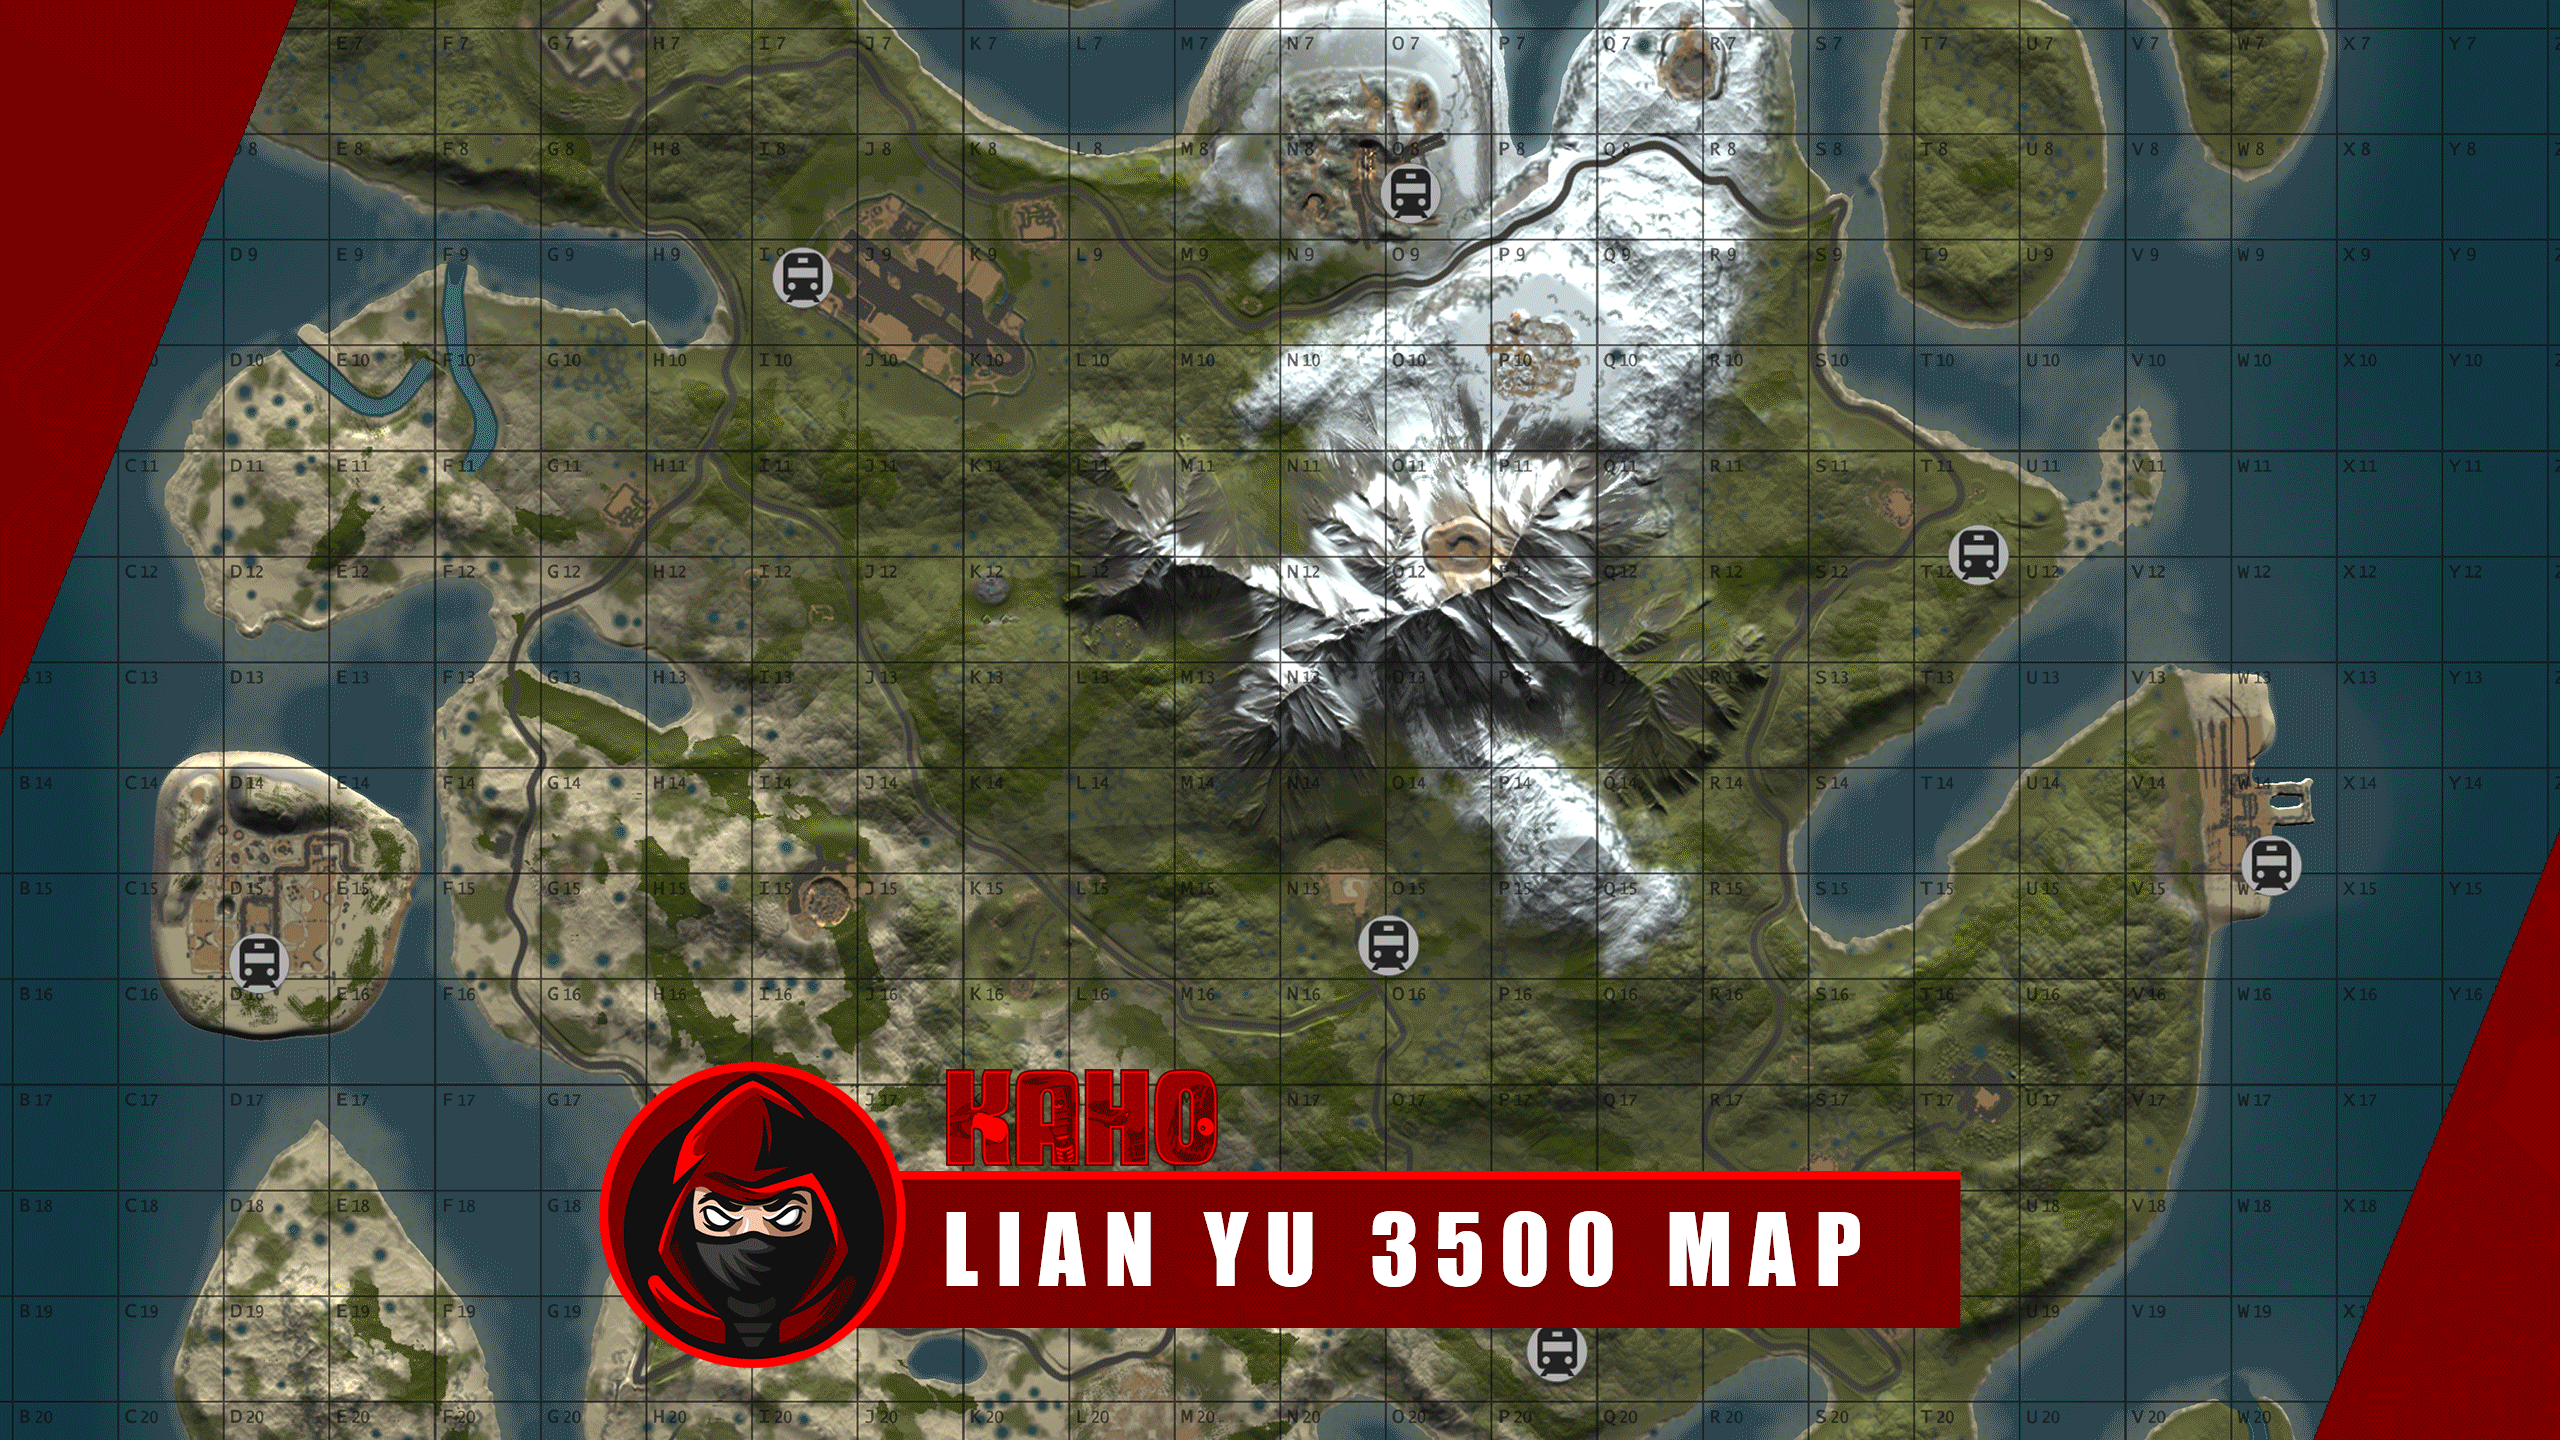 Lian Yu - 3500 Map by Kaho